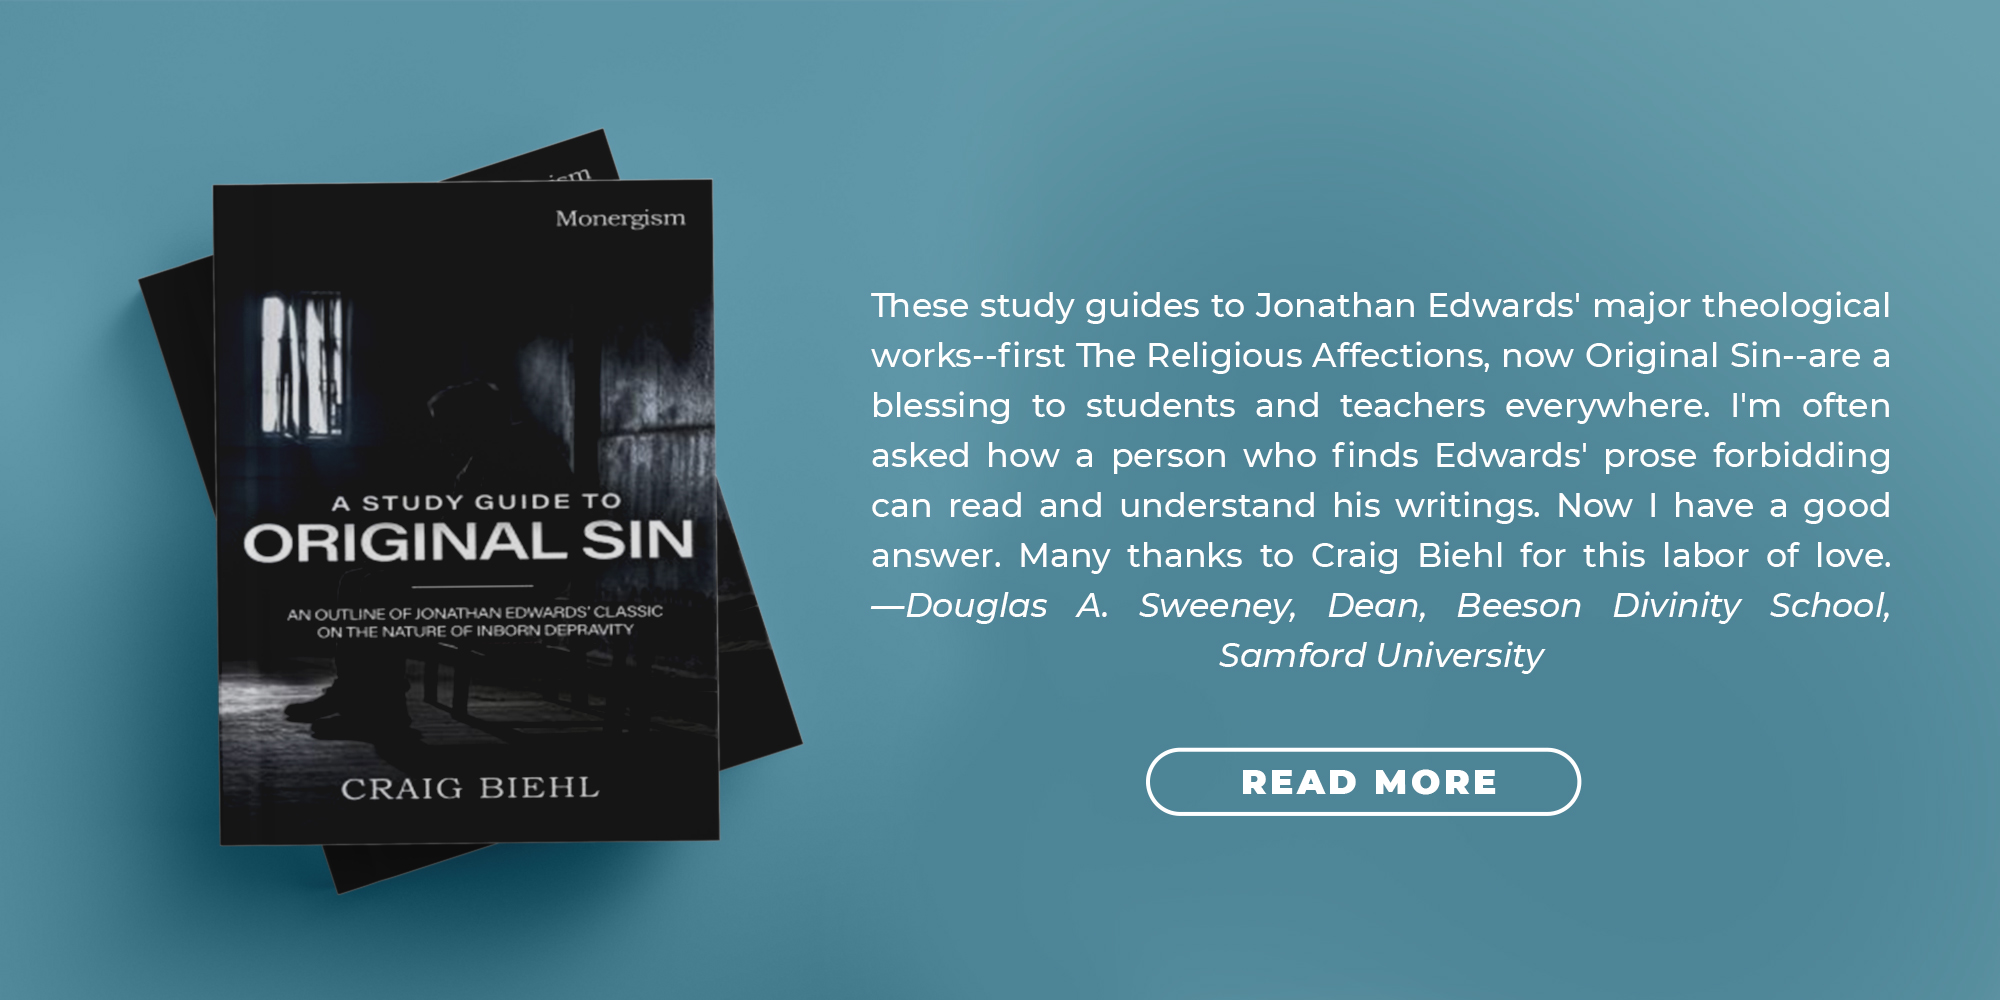 A Study Guide to Original Sin